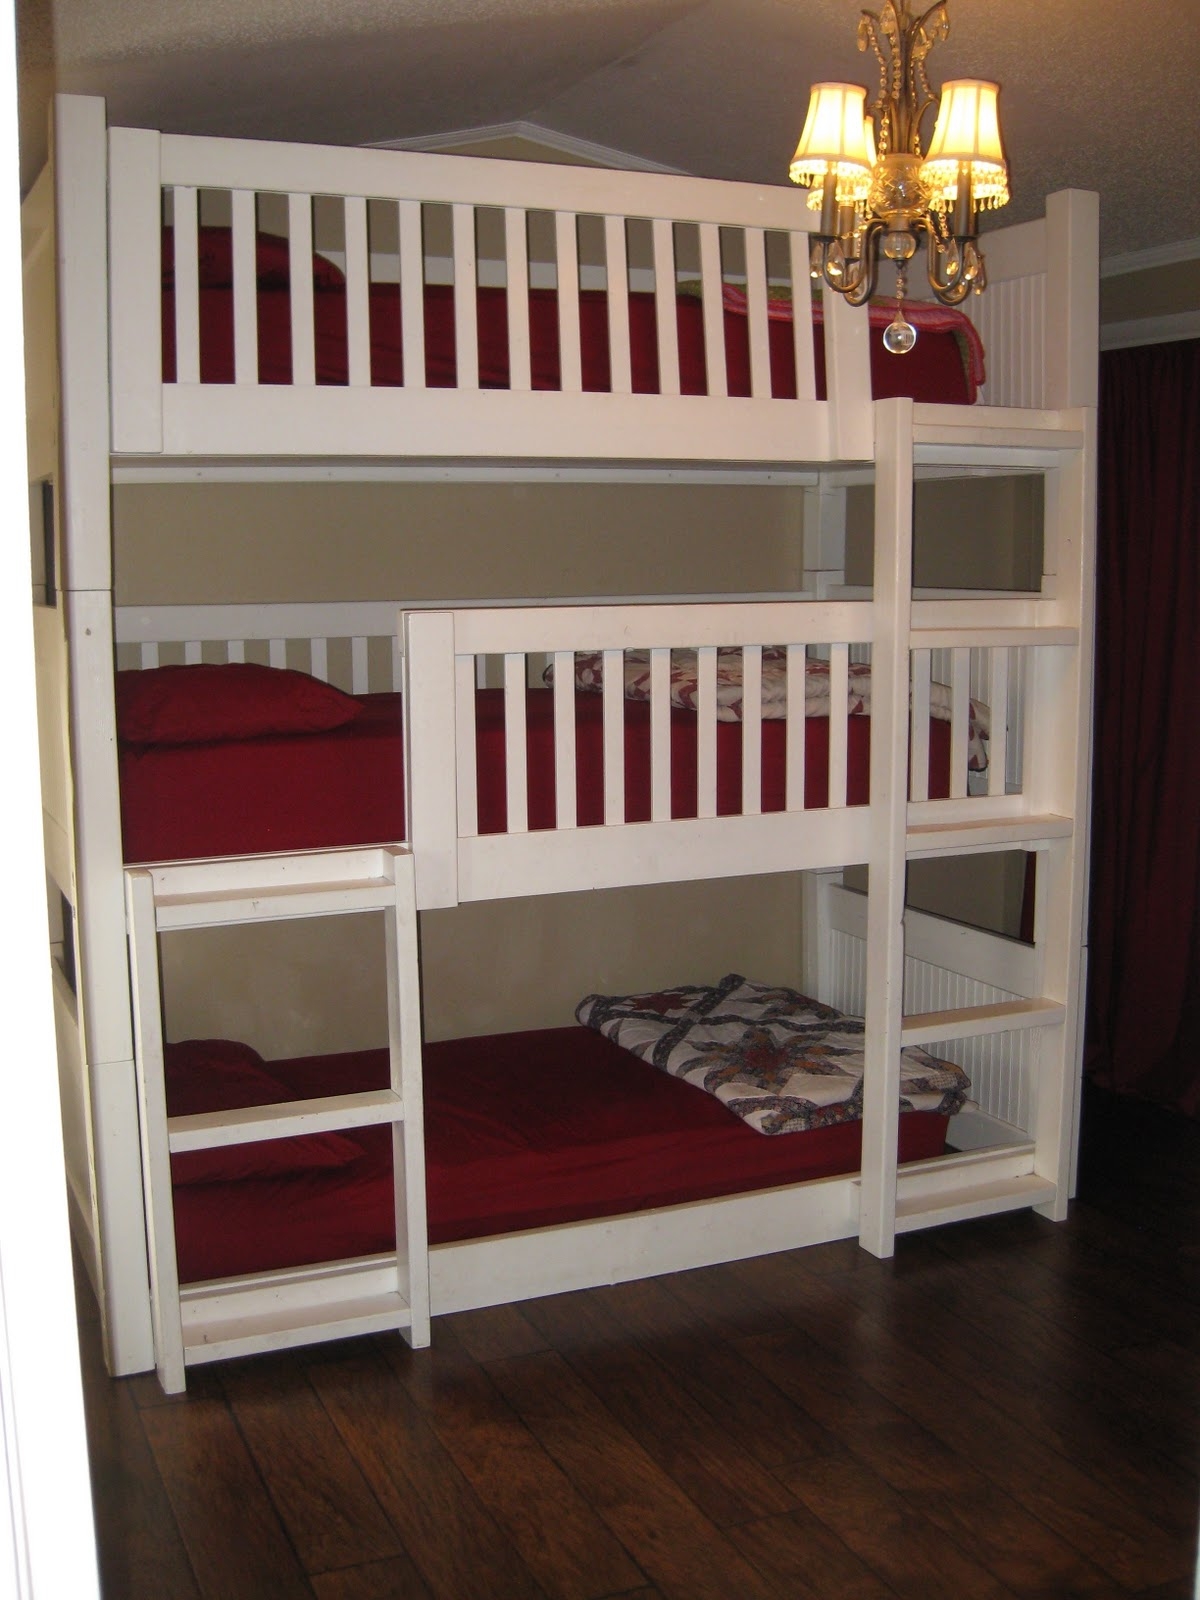 Triple bunk beds for sale